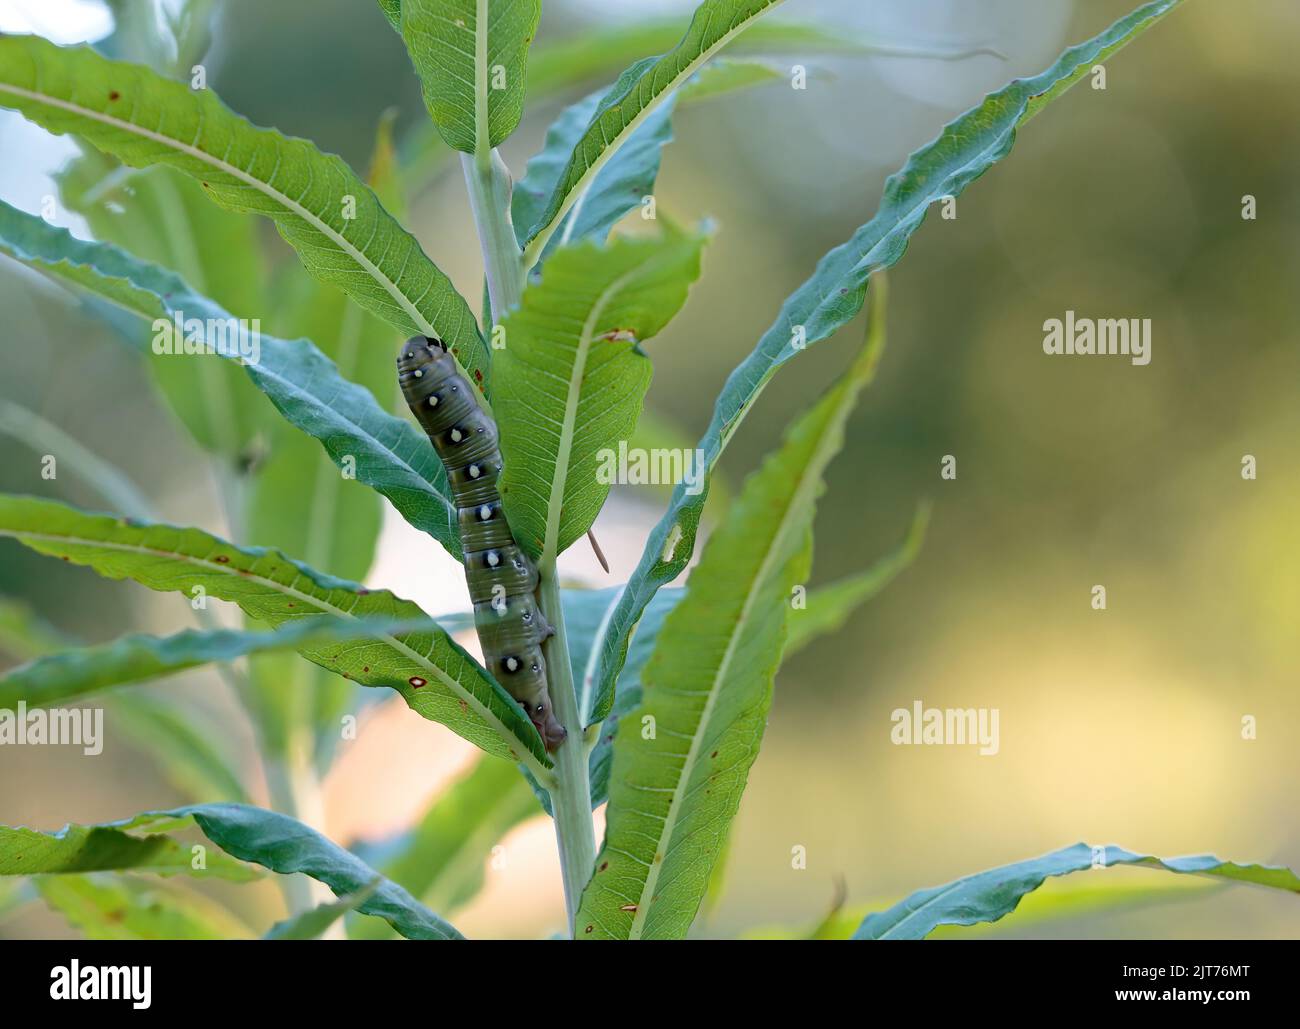 Caterpillar of hawk moth feeding on rosebay willow herb Stock Photo